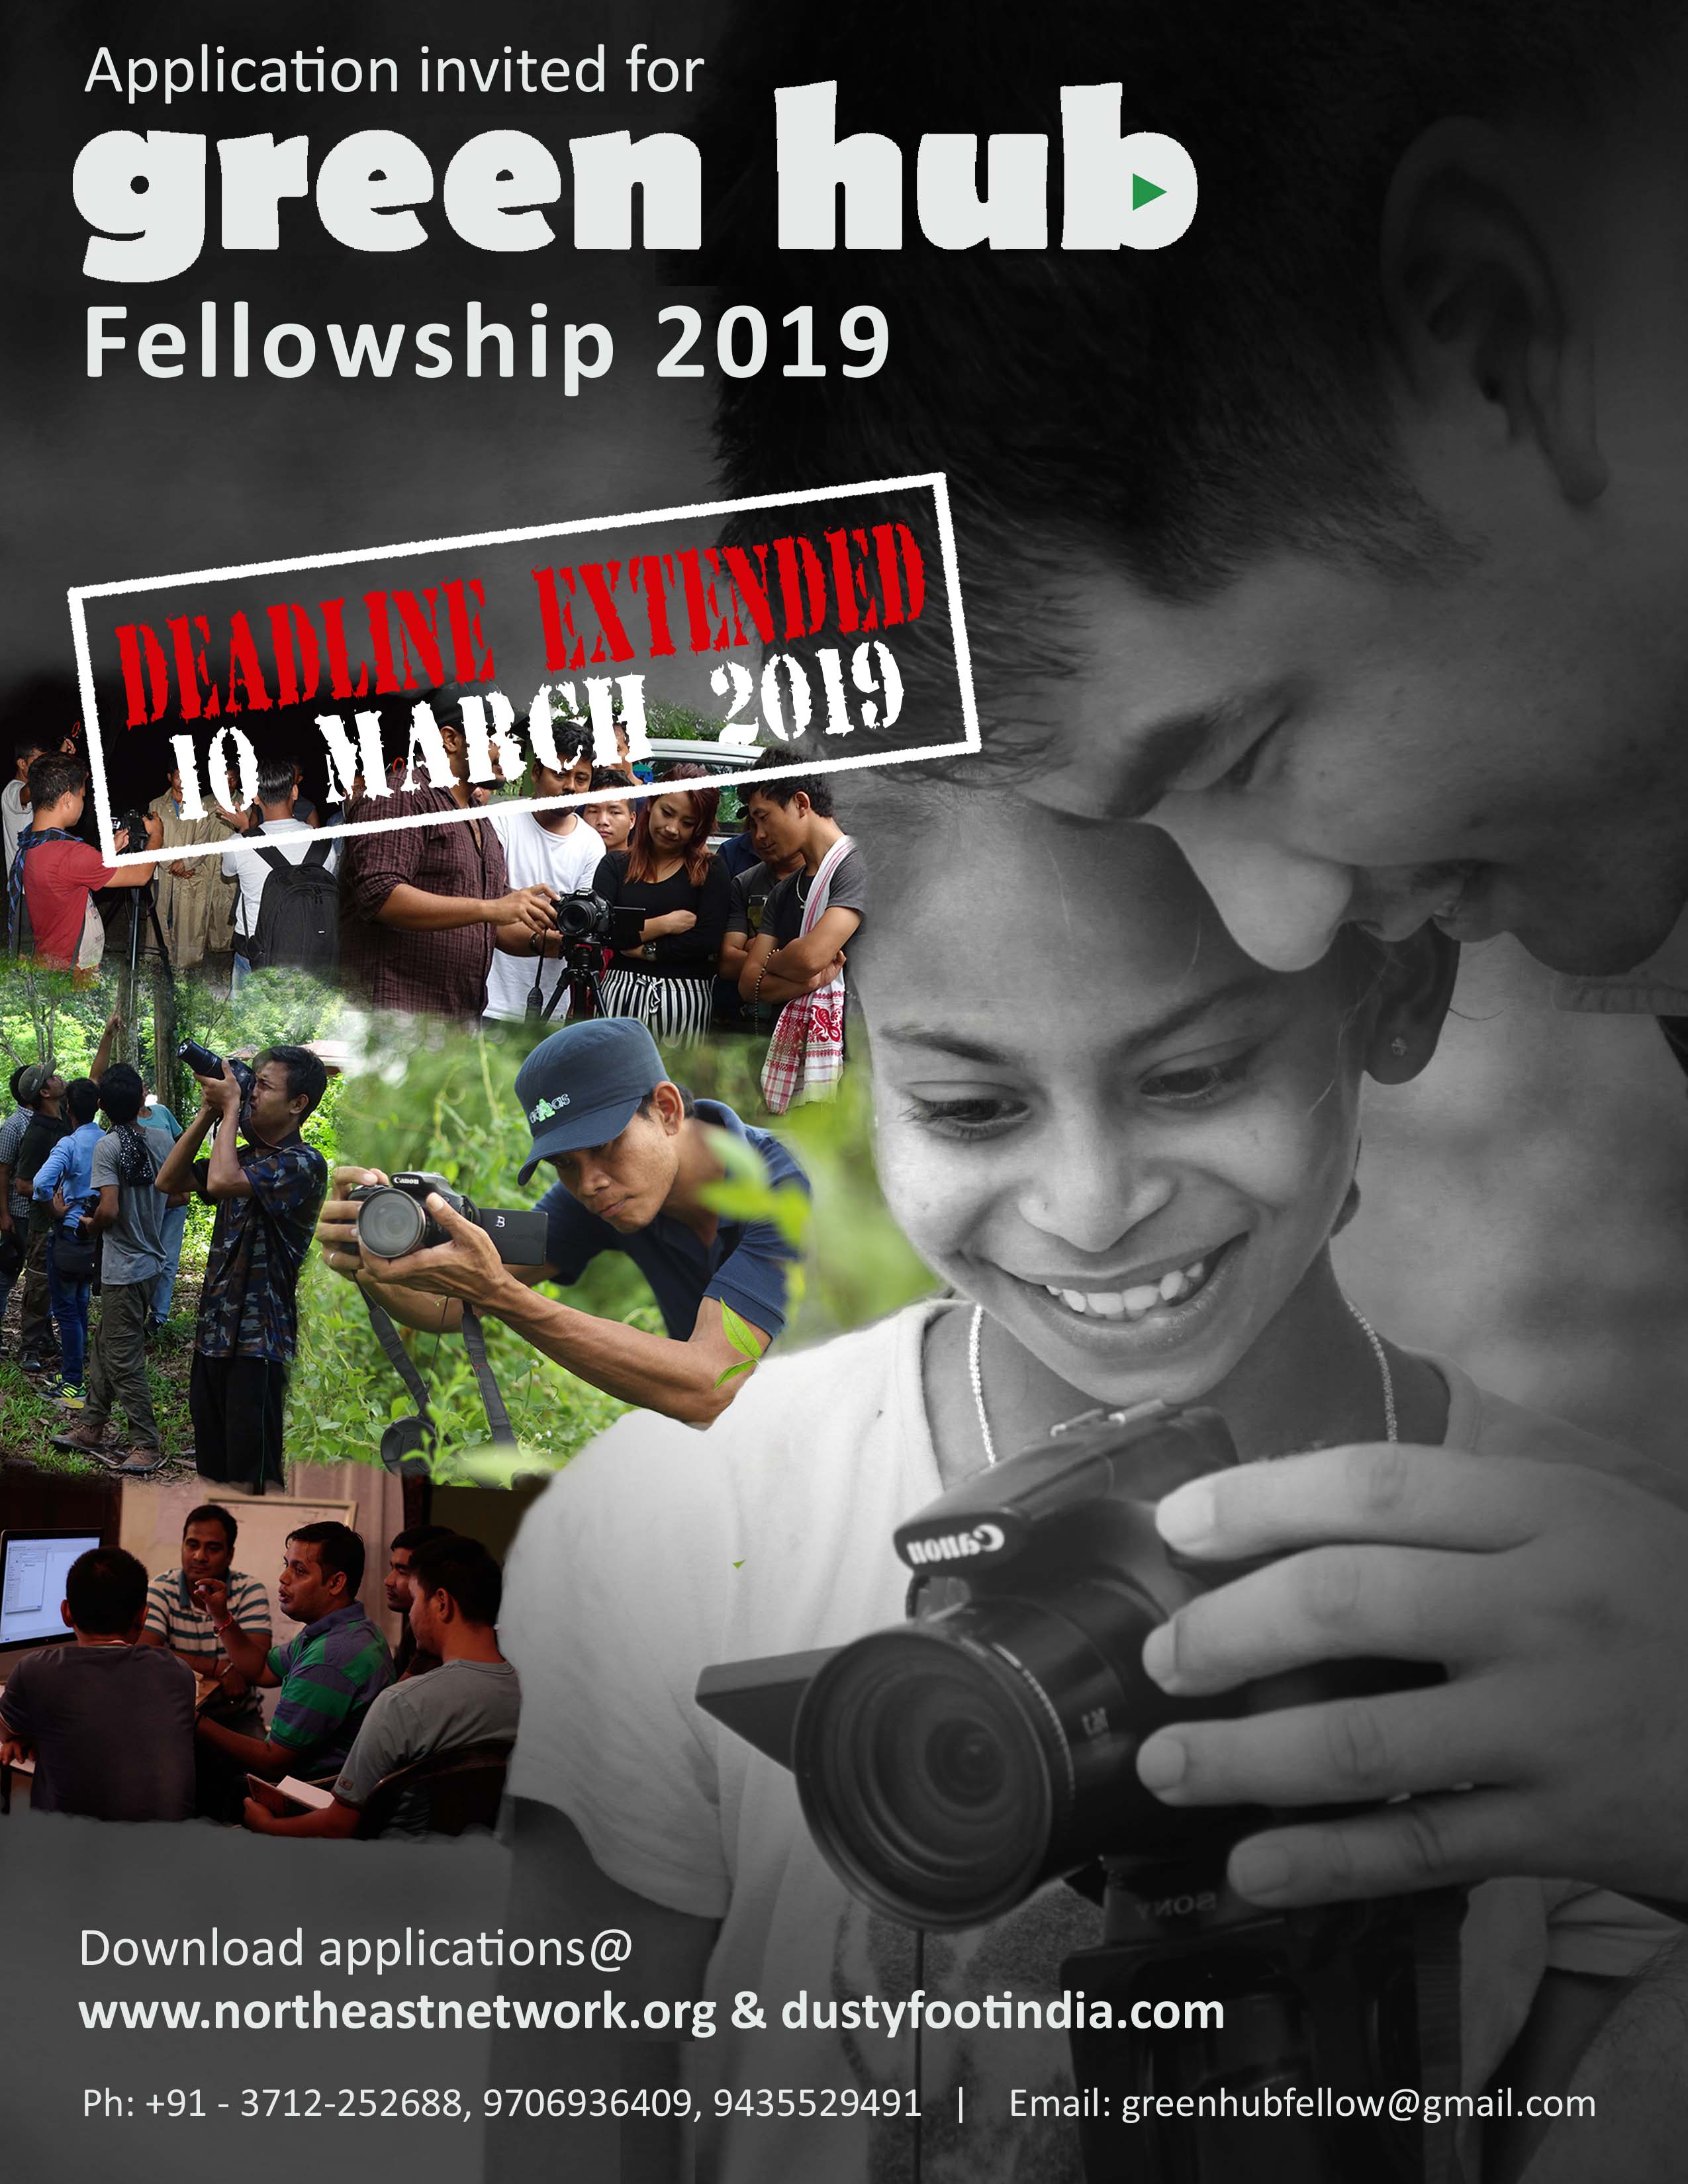 Green hub Fellowship 2019